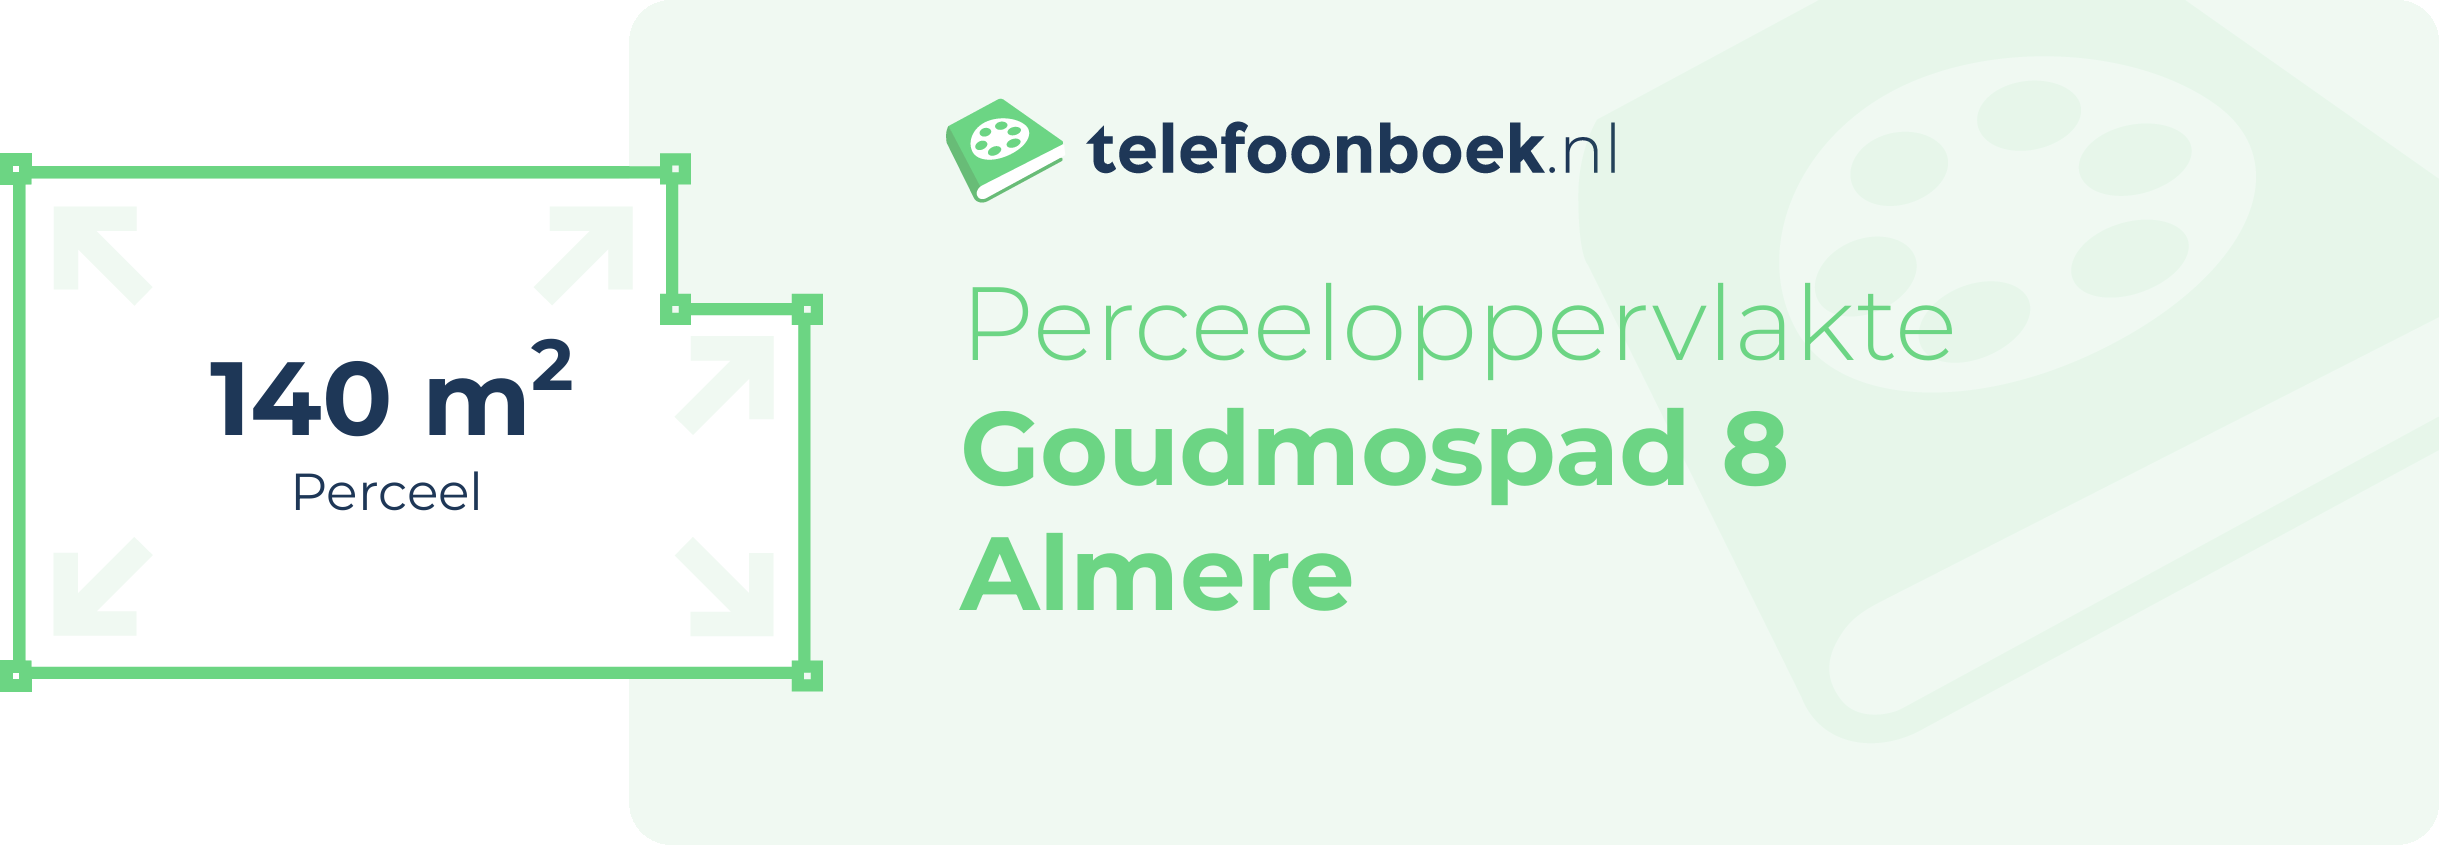 Perceeloppervlakte Goudmospad 8 Almere